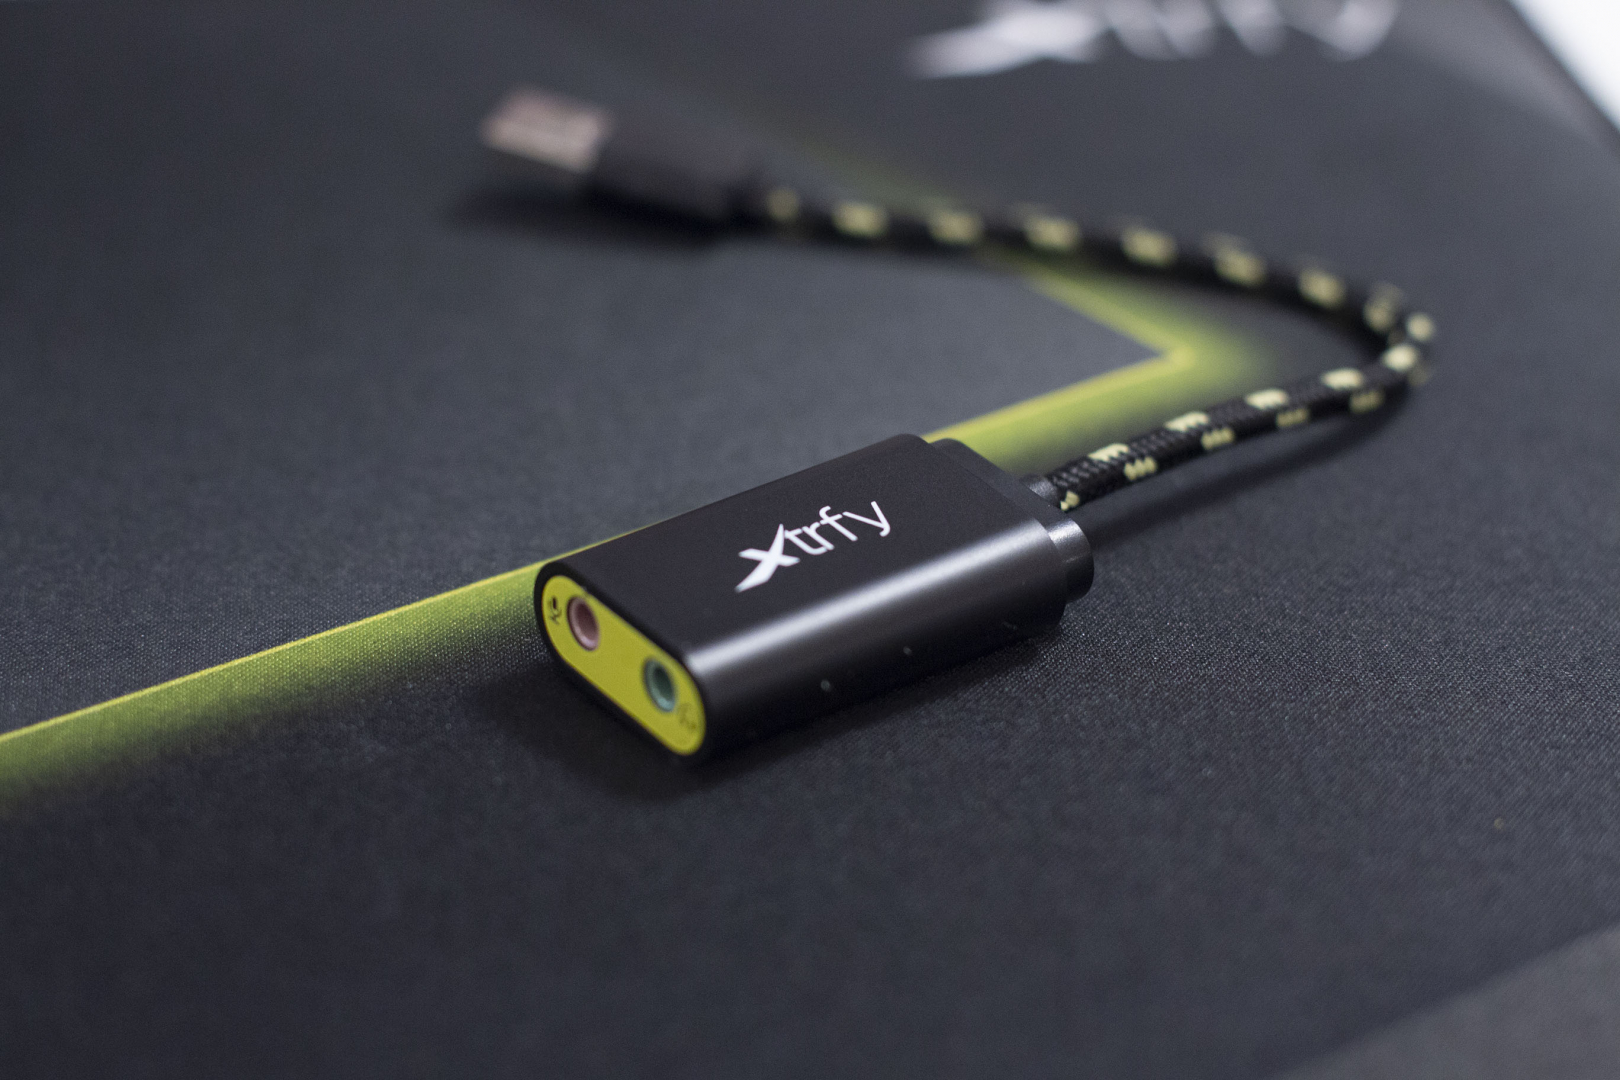 Xtrfys USB-ljudkort ger alla headsets H1-kvalité.